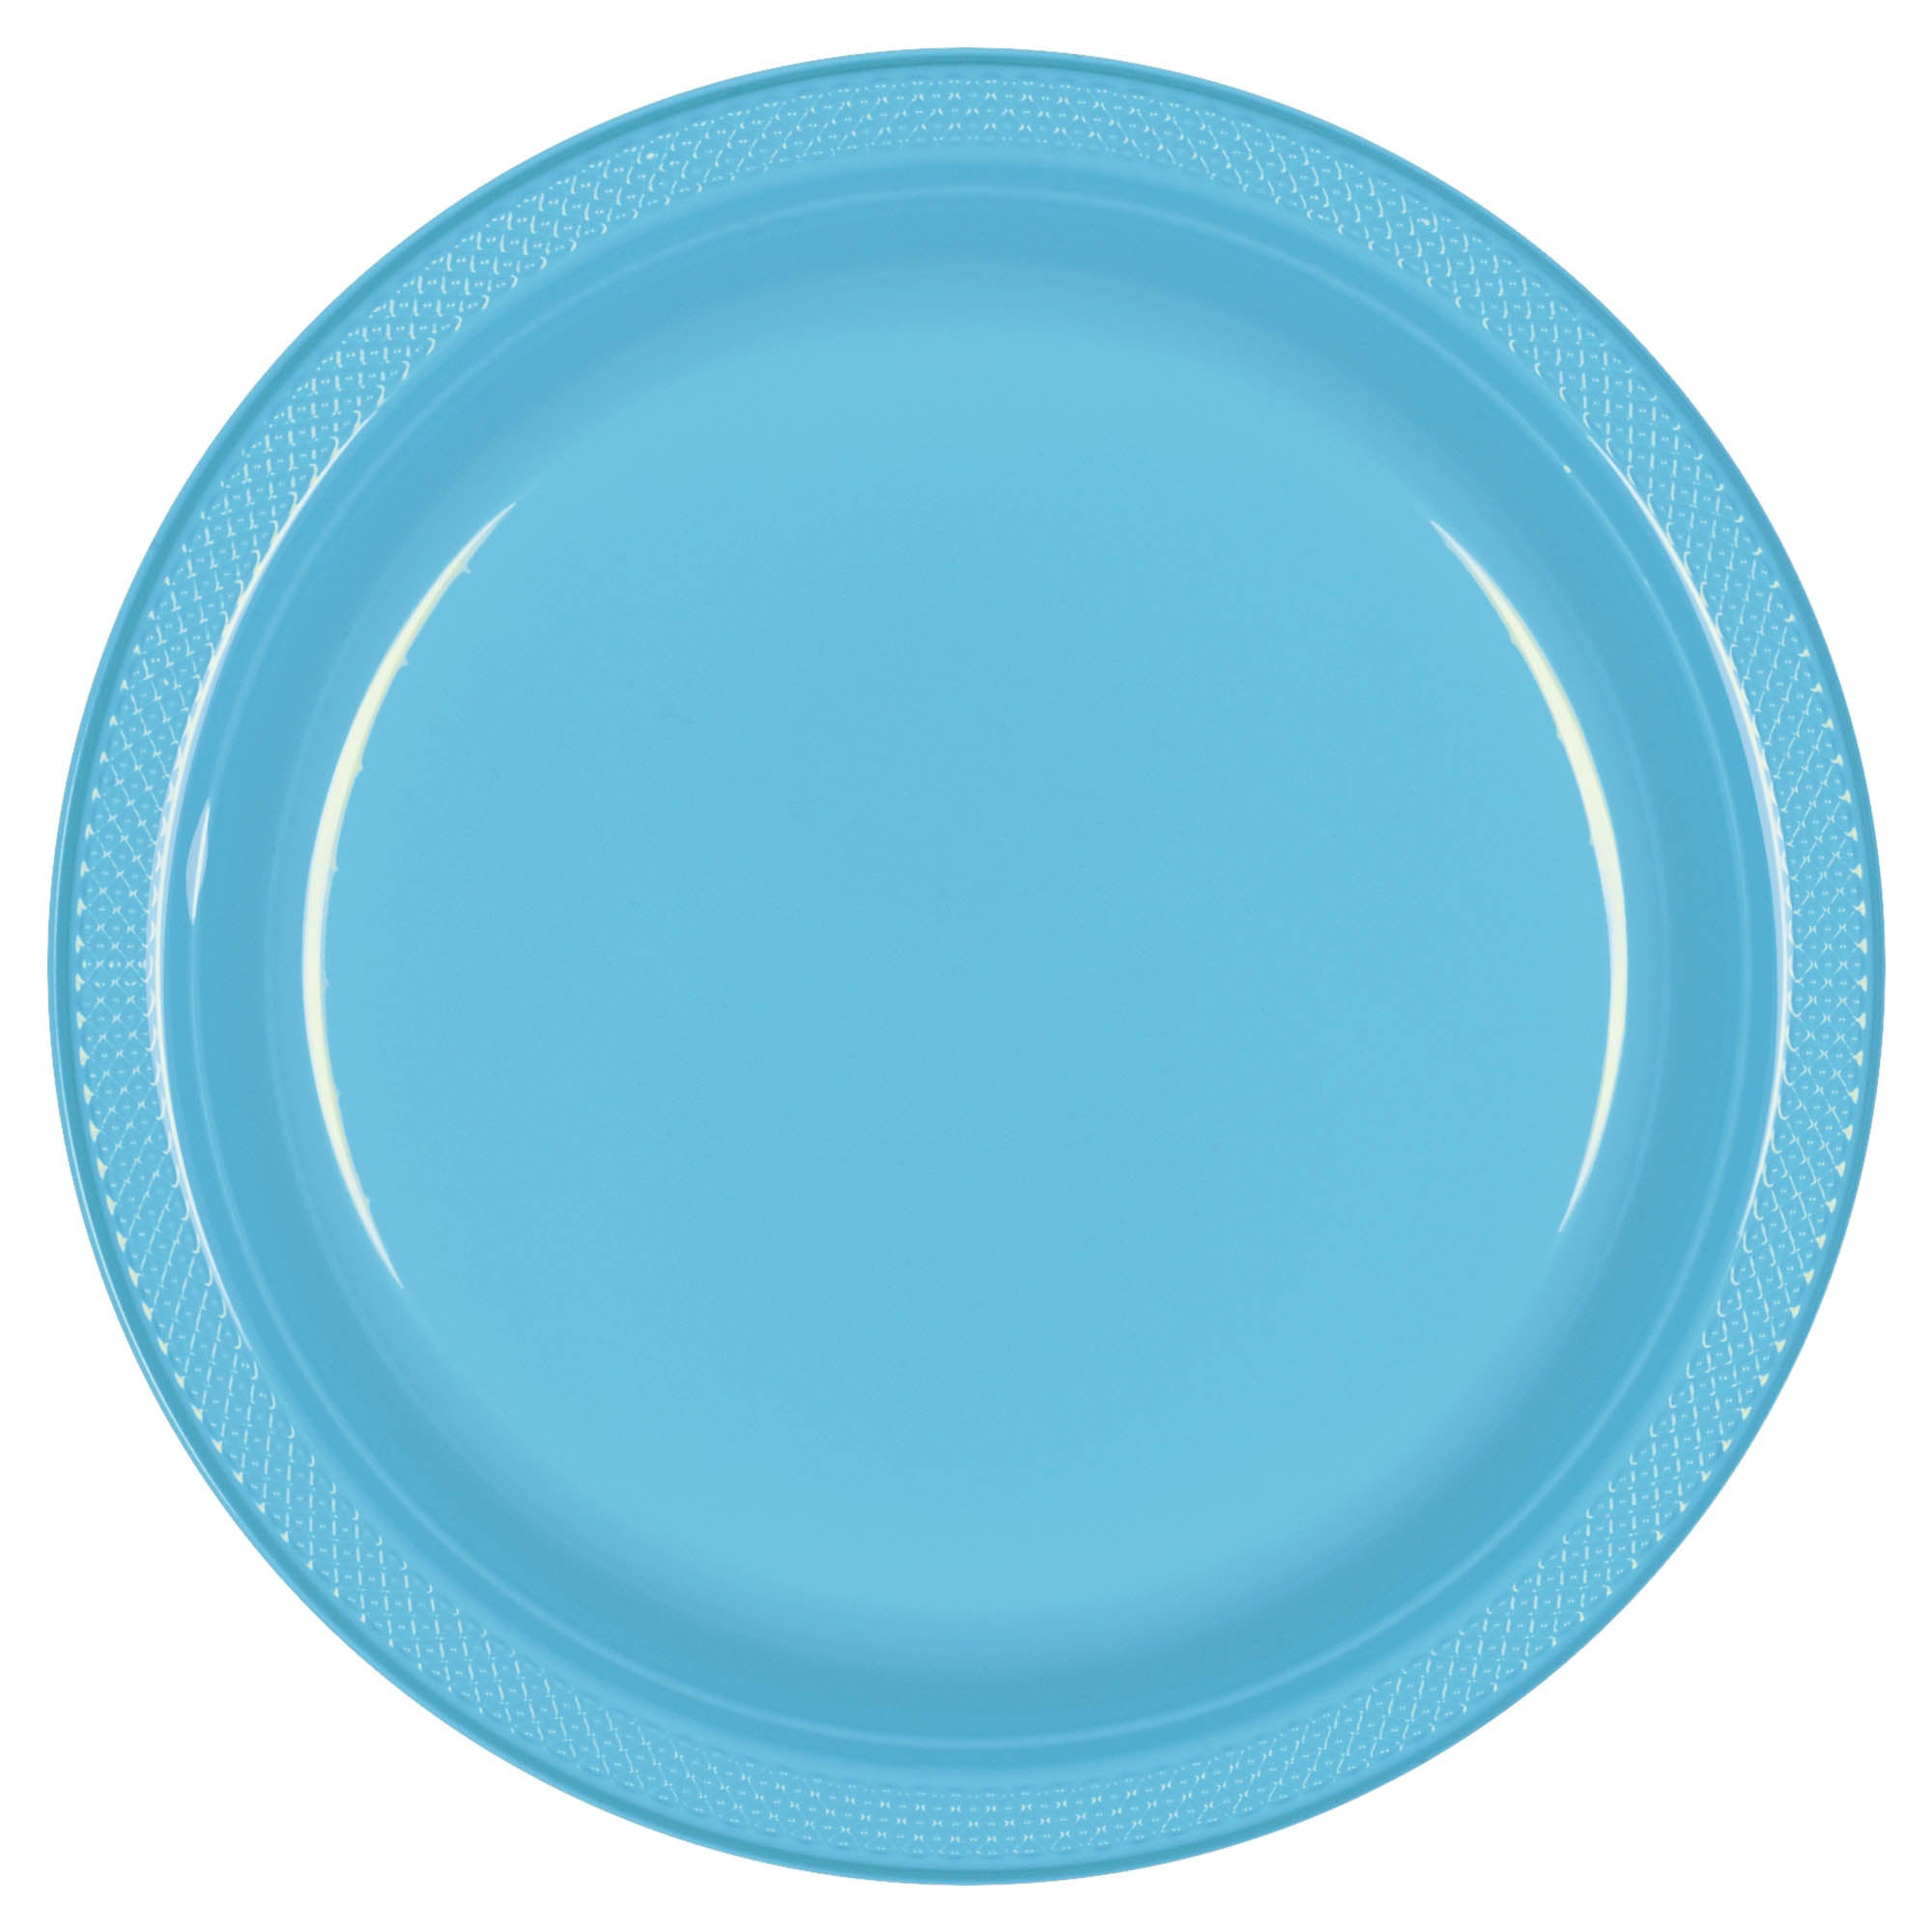 Caribbean Blue 10" Round Plastic Plates, 20 count